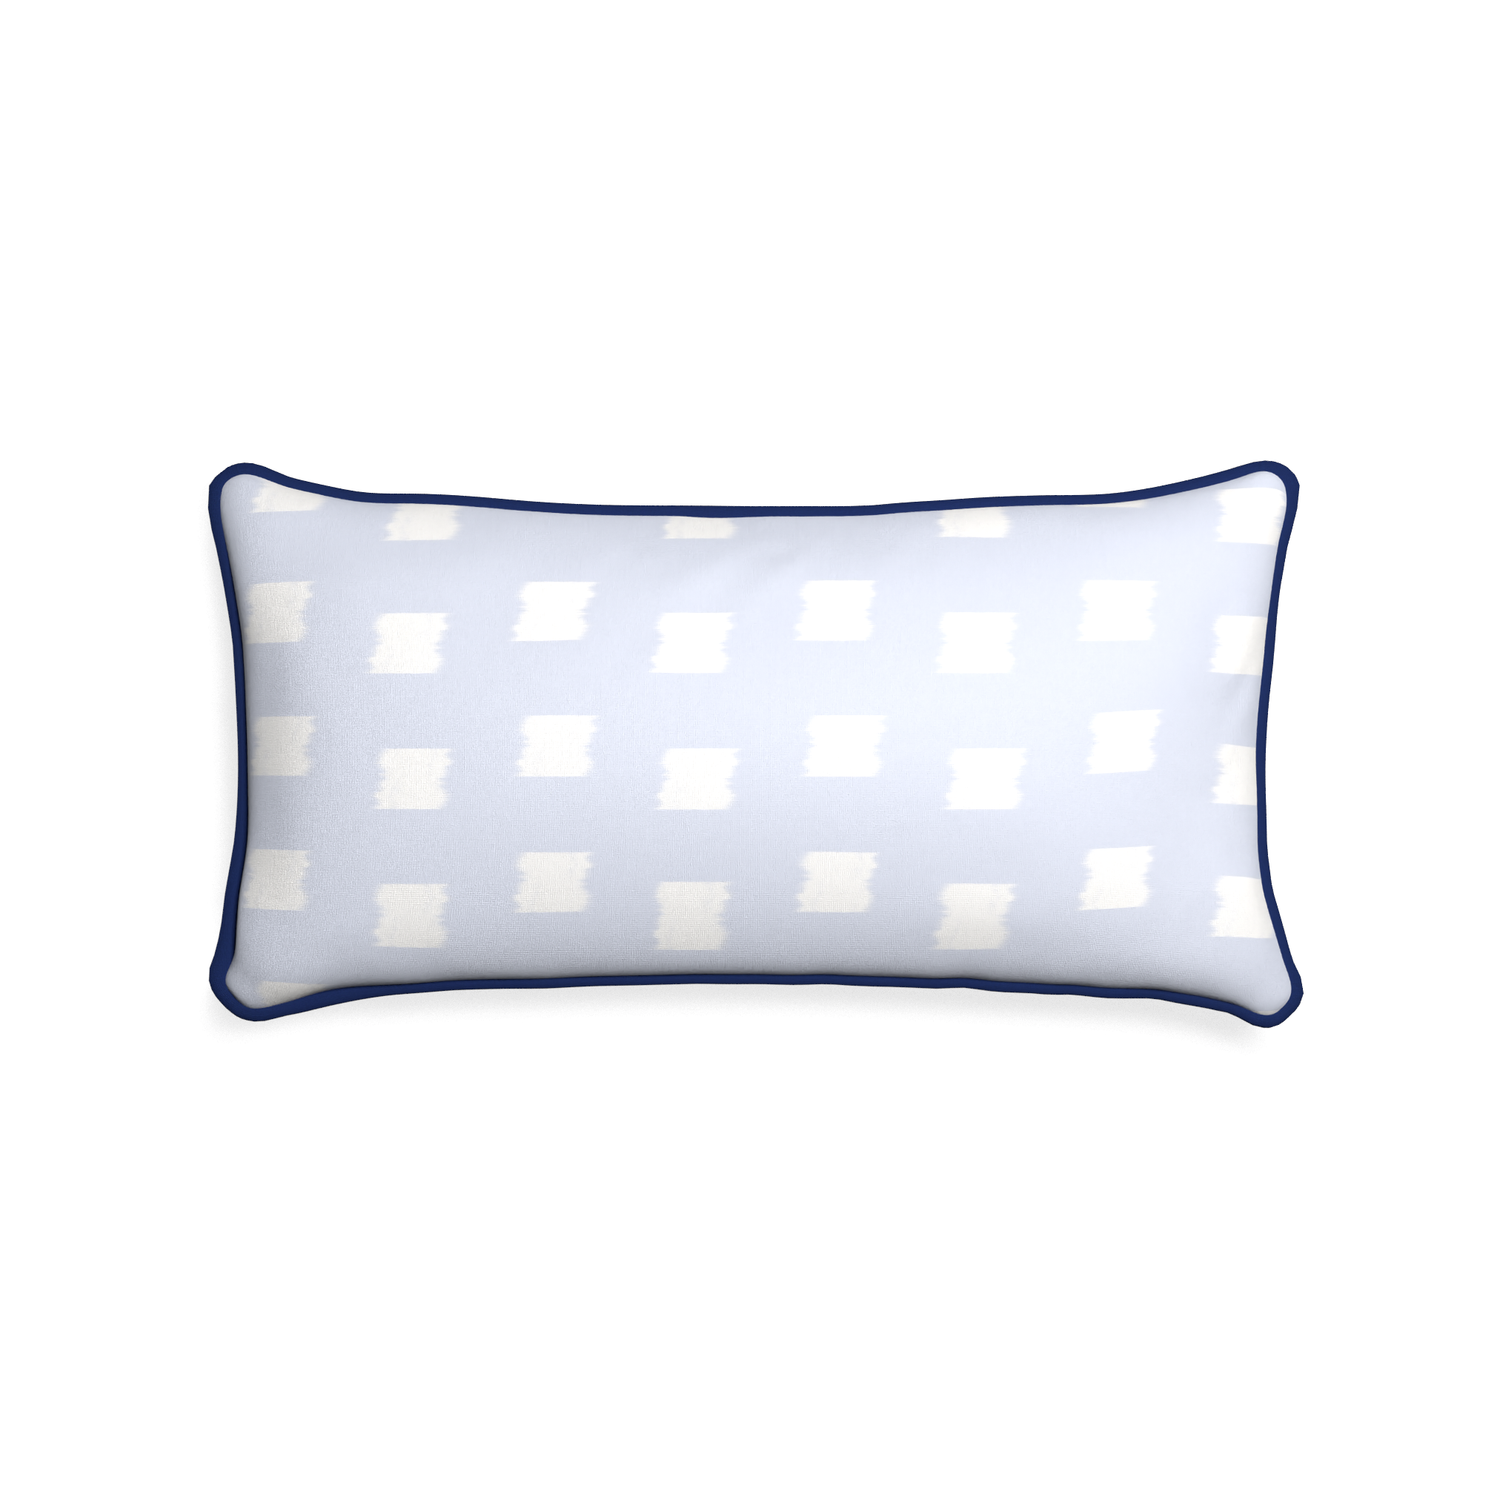 Midi-lumbar denton custom sky blue patternpillow with midnight piping on white background